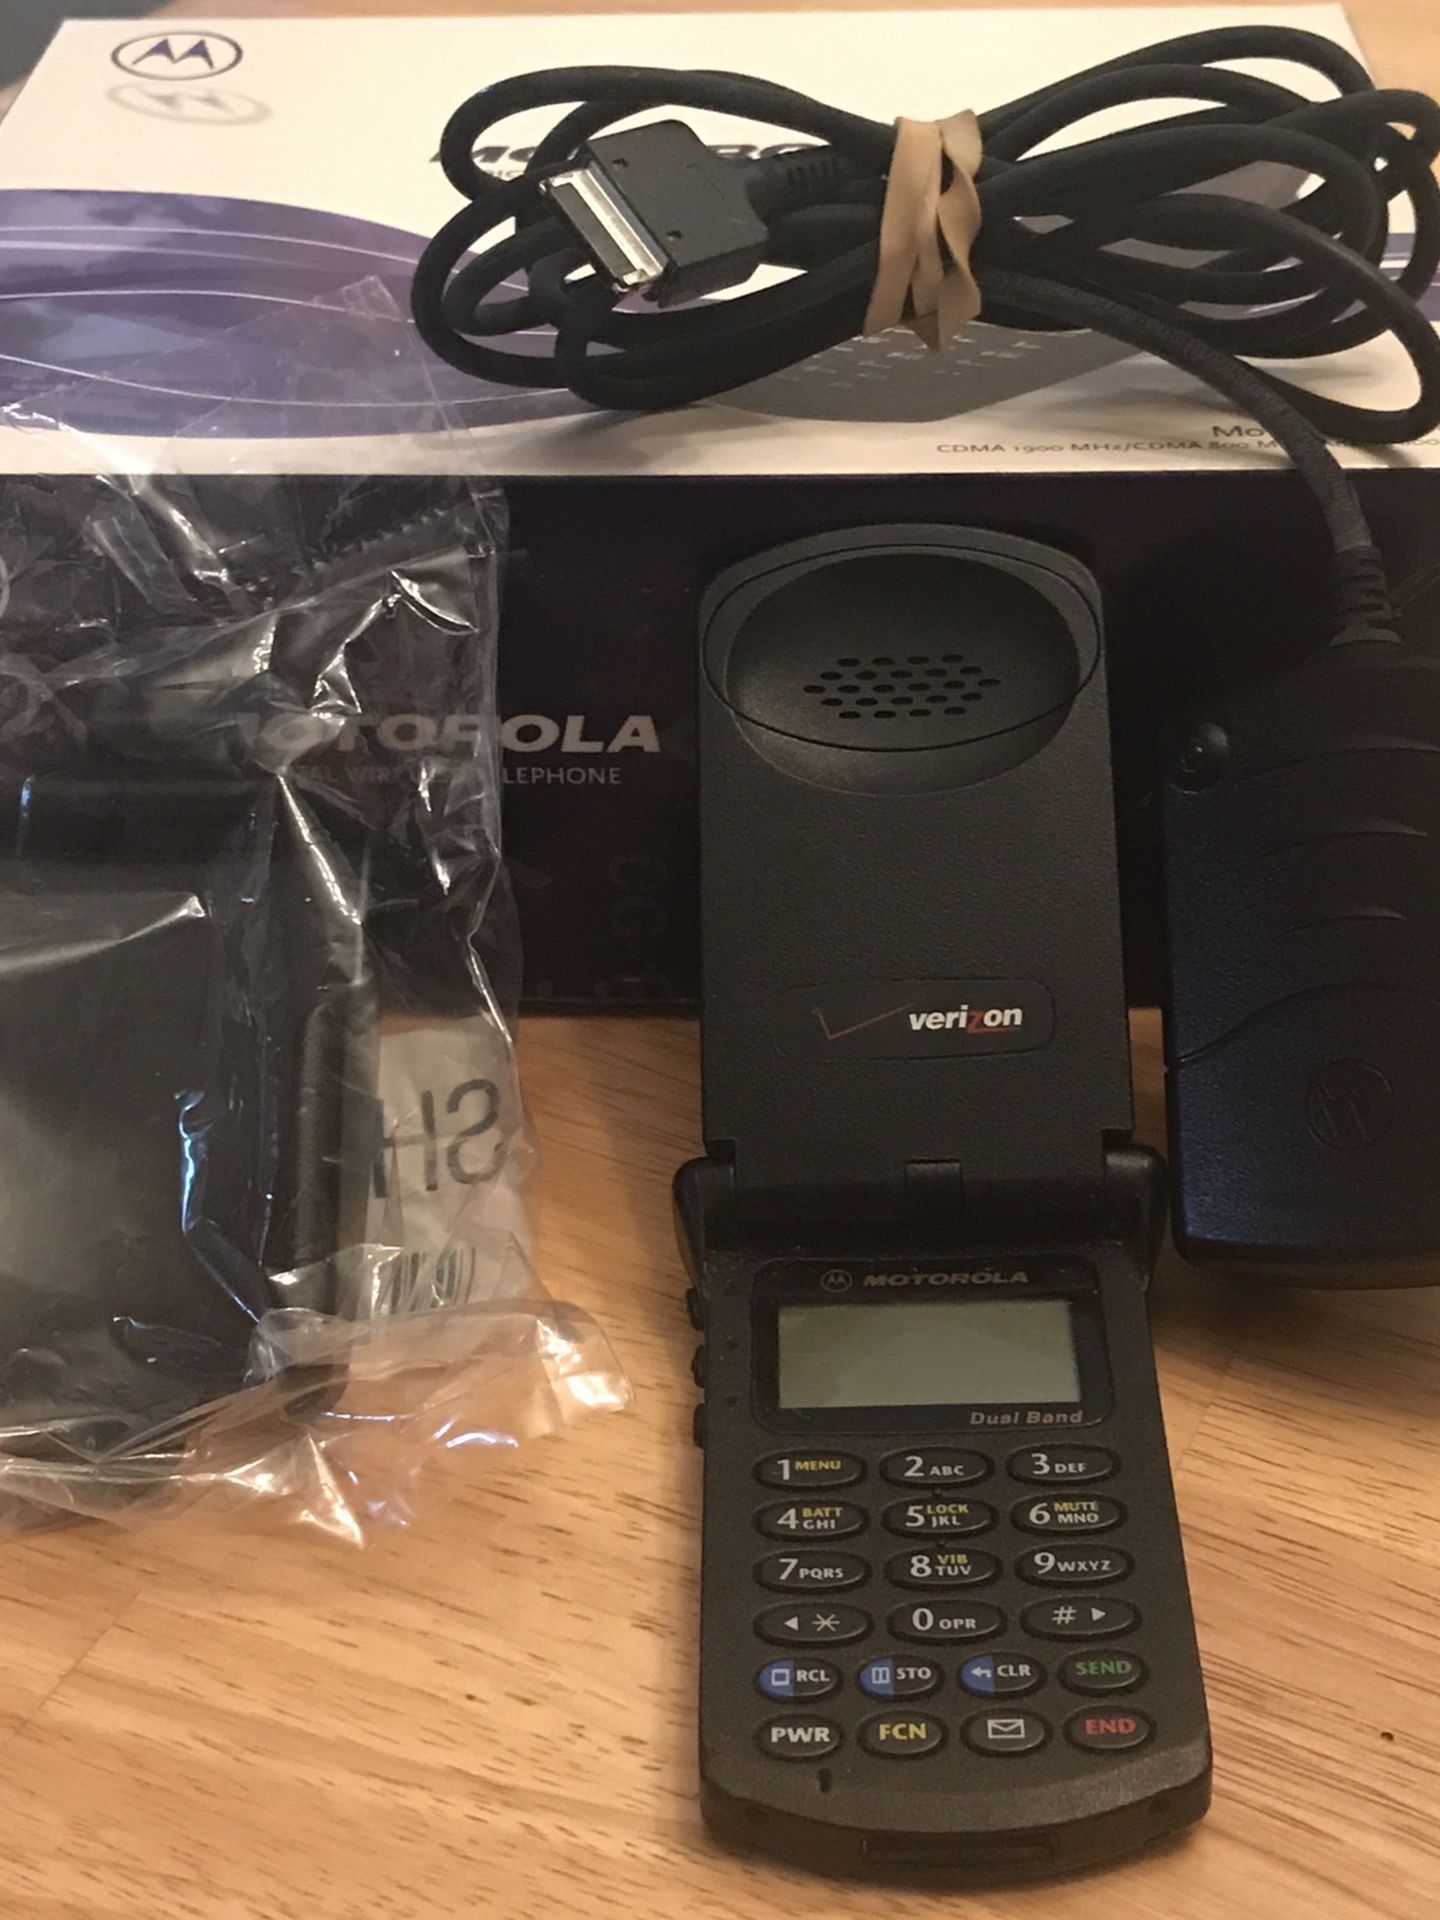 Motorola StarTac Flip Phone With Accessories *Used* (Black) Verizon